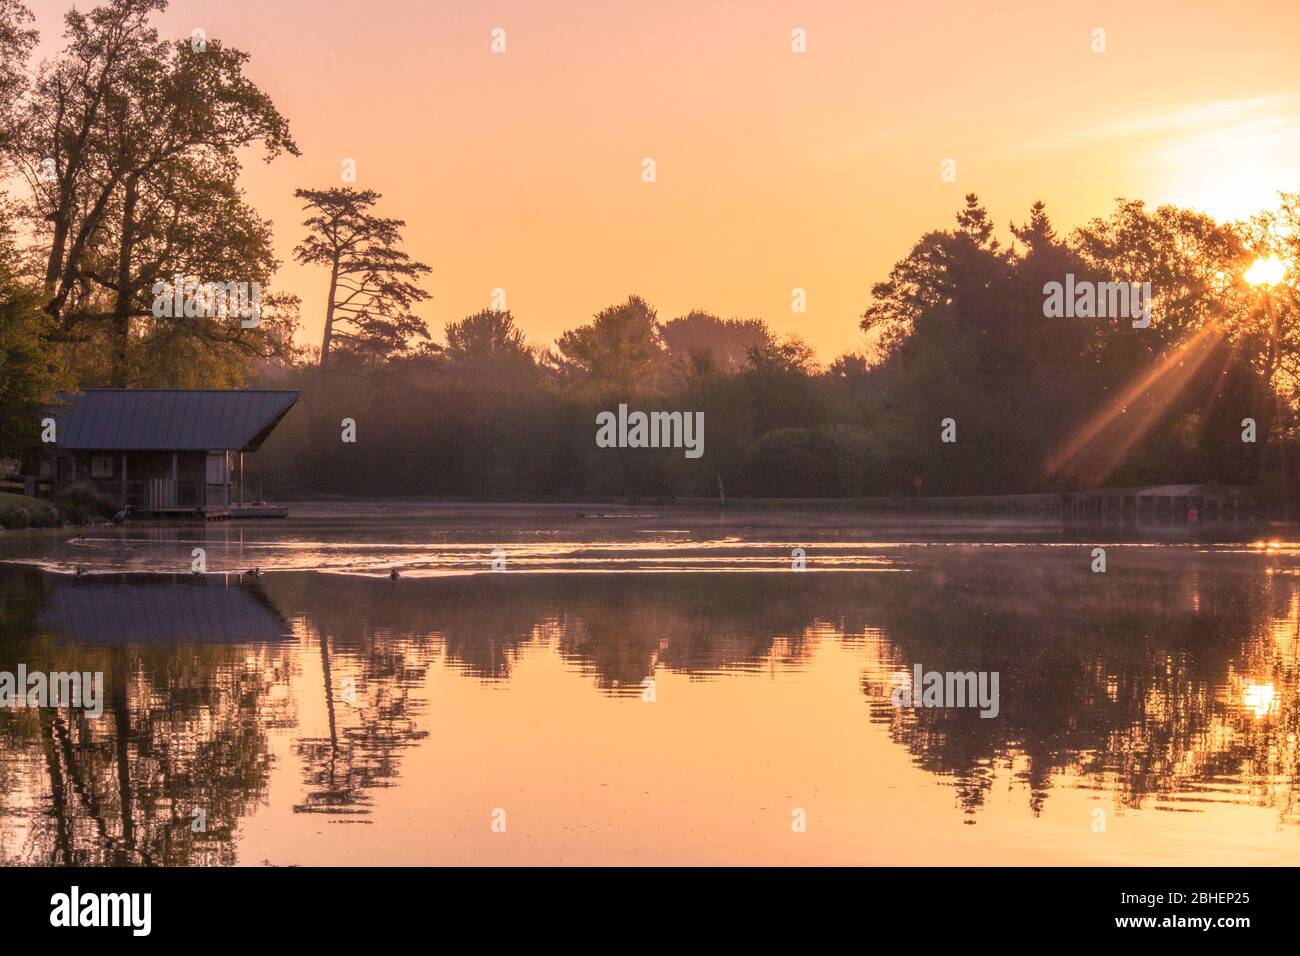 Dunorlan Park, Royal Tunbridge Wells, Kent, Sunrise in the park in April Stock Photo